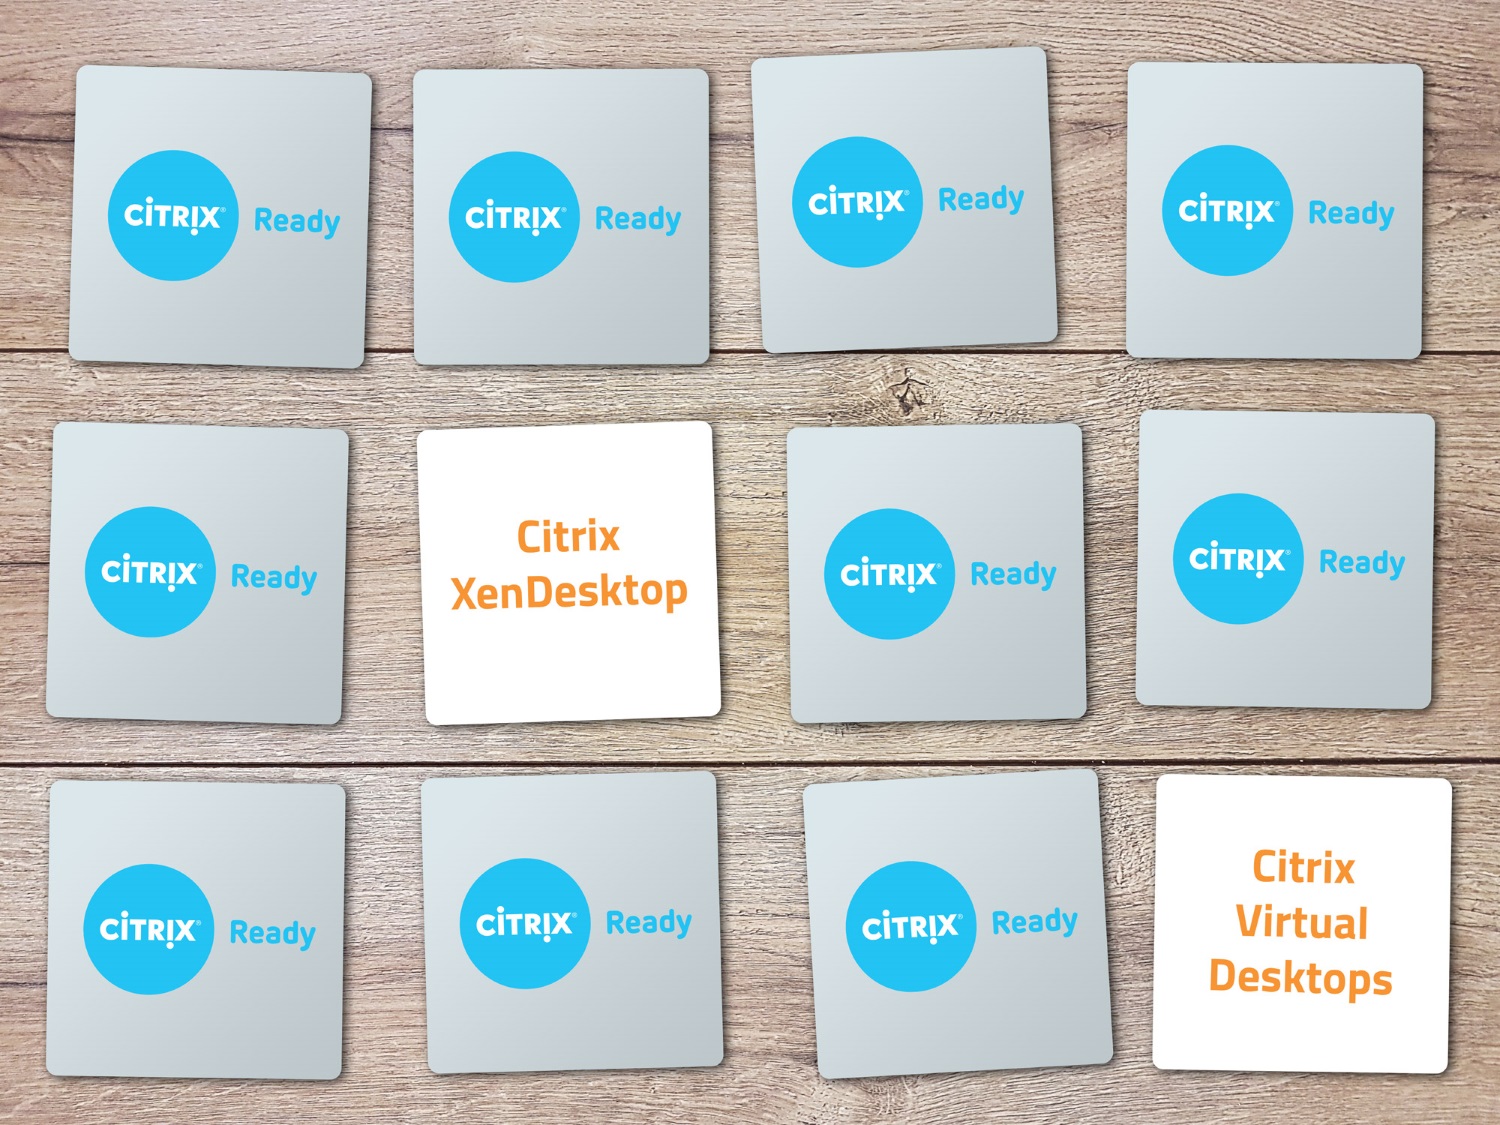 Citrix renaming products